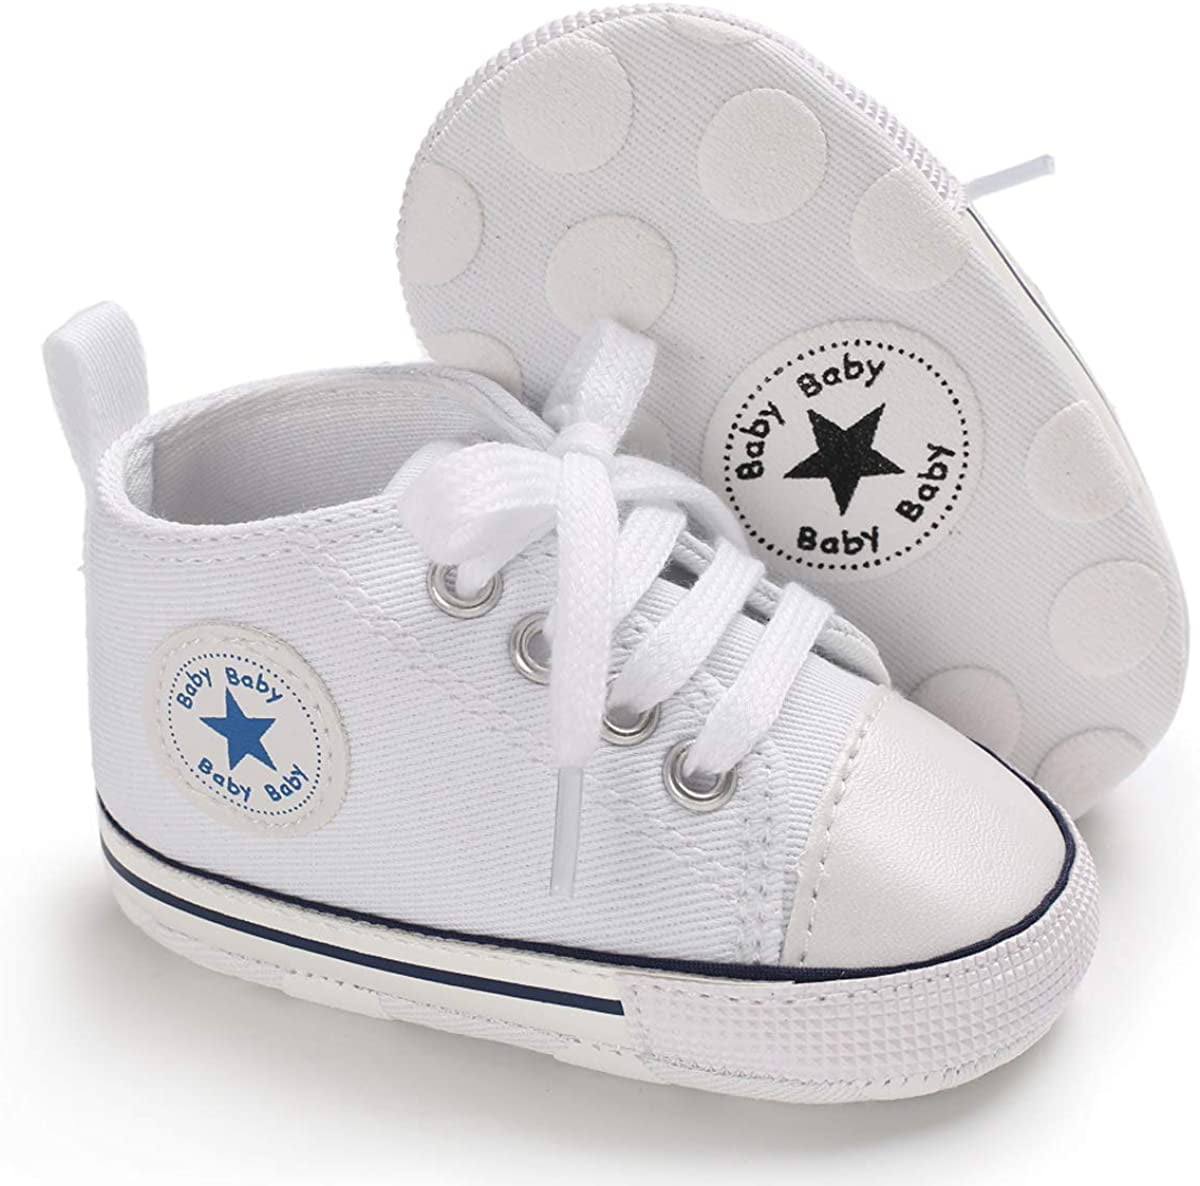 Tutoo Unisex Baby Boys Girls High Top Sneaker Soft Anti-Slip Sole Newborn Infant First Walkers Canvas Denim Shoes